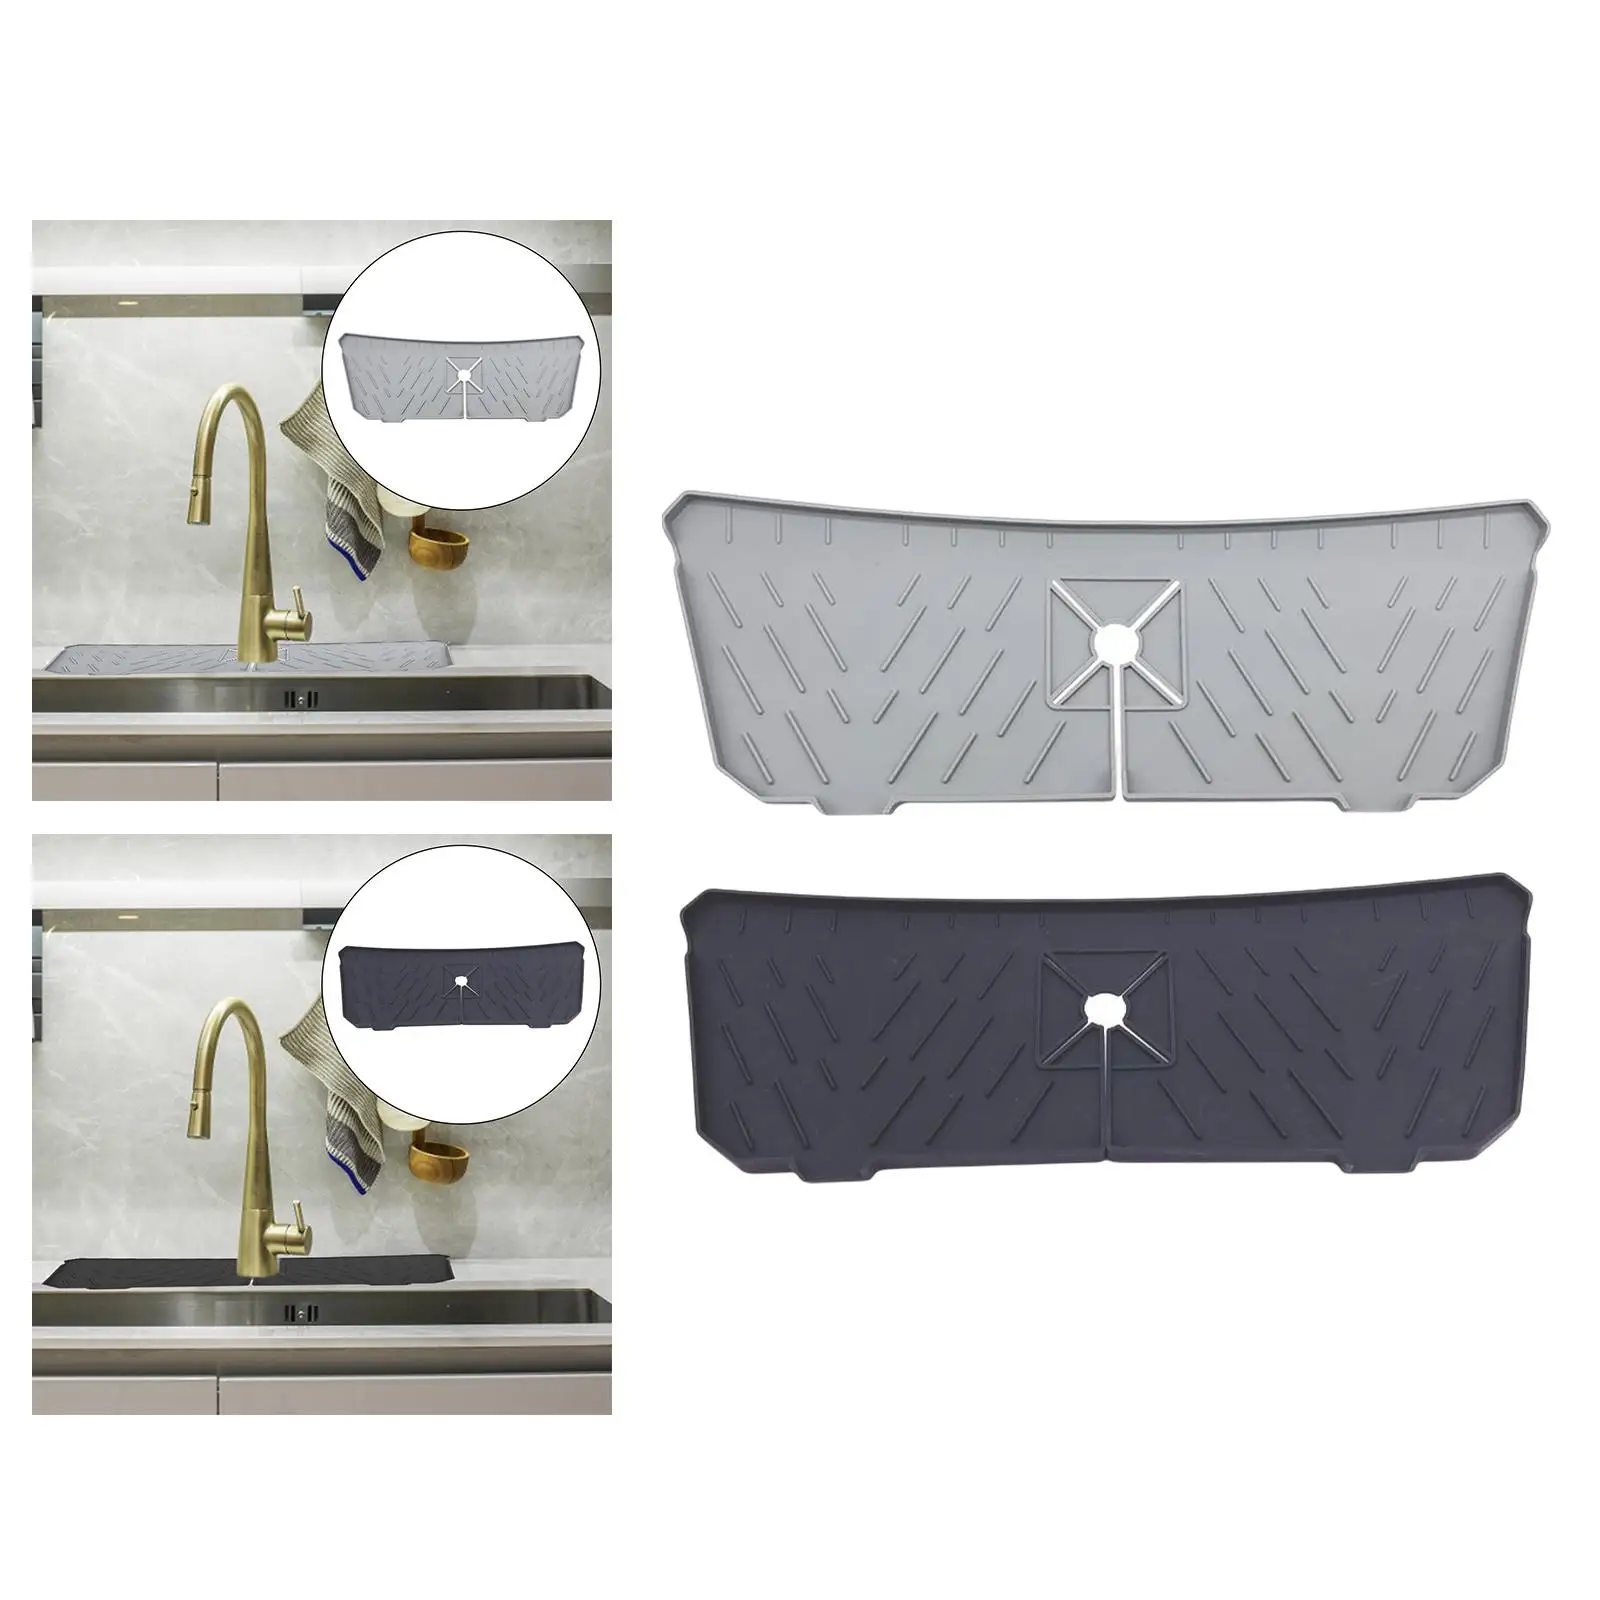 Sink splashing Guard Mats Countertop Protector Protection Mat for Bathroom